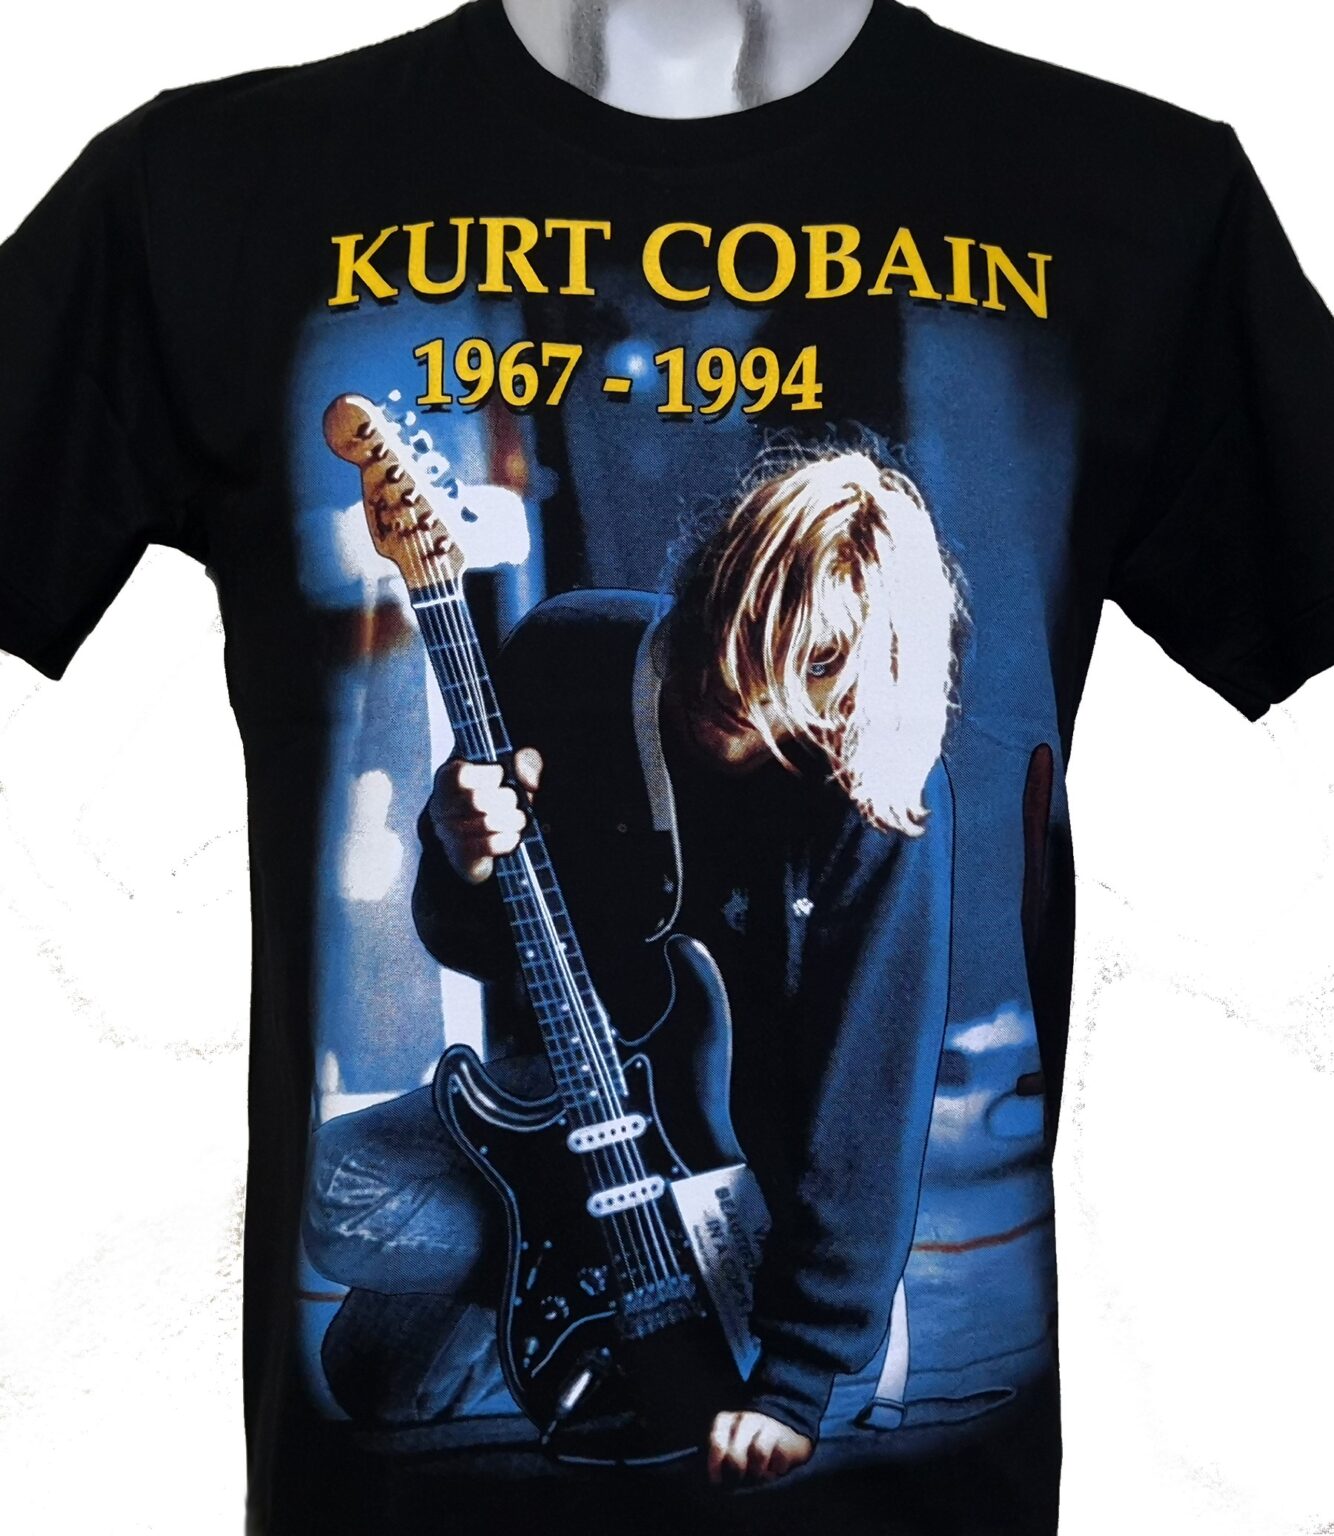 Kurt Cobain t-shirt size XL â RoxxBKK